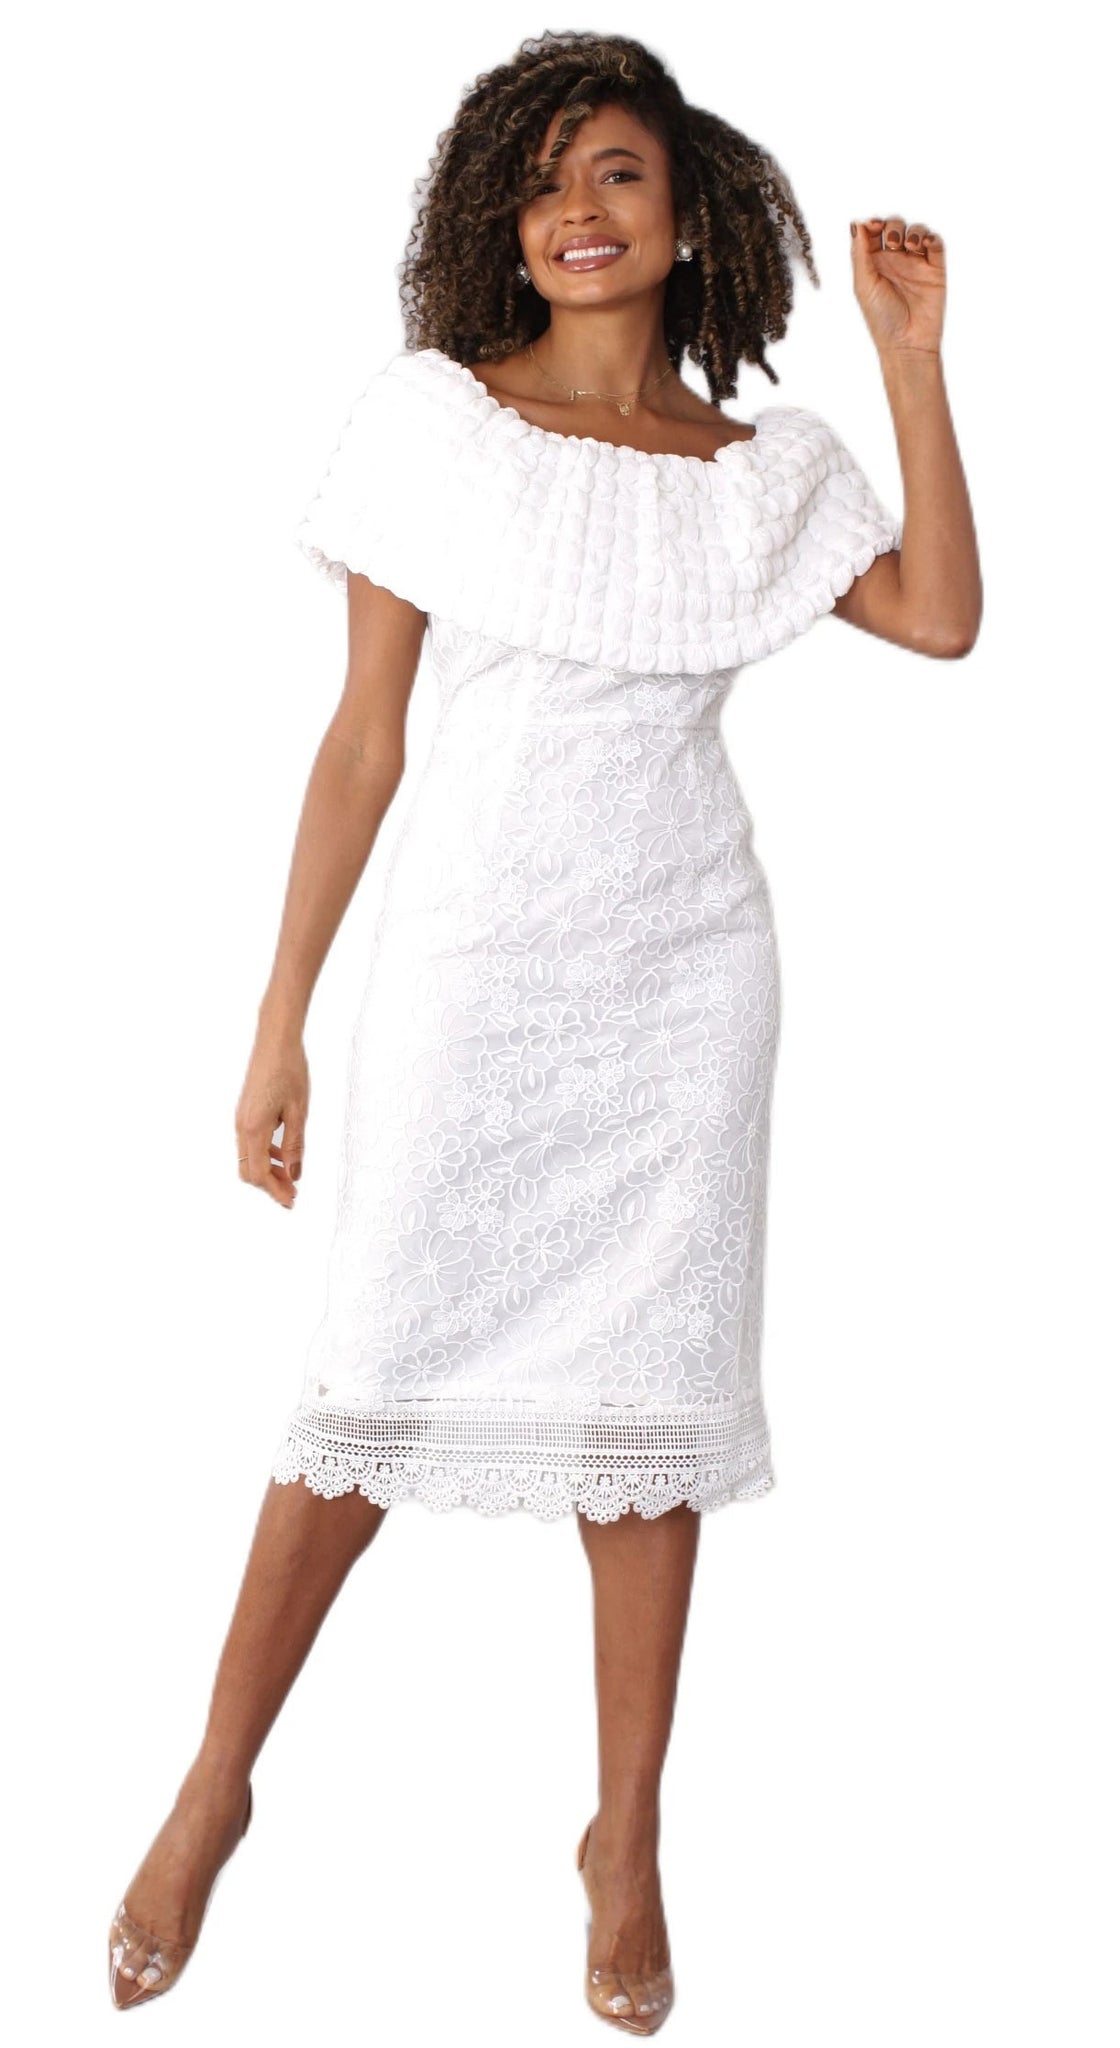 Chancele Dress 9578-White - Church Suits For Less